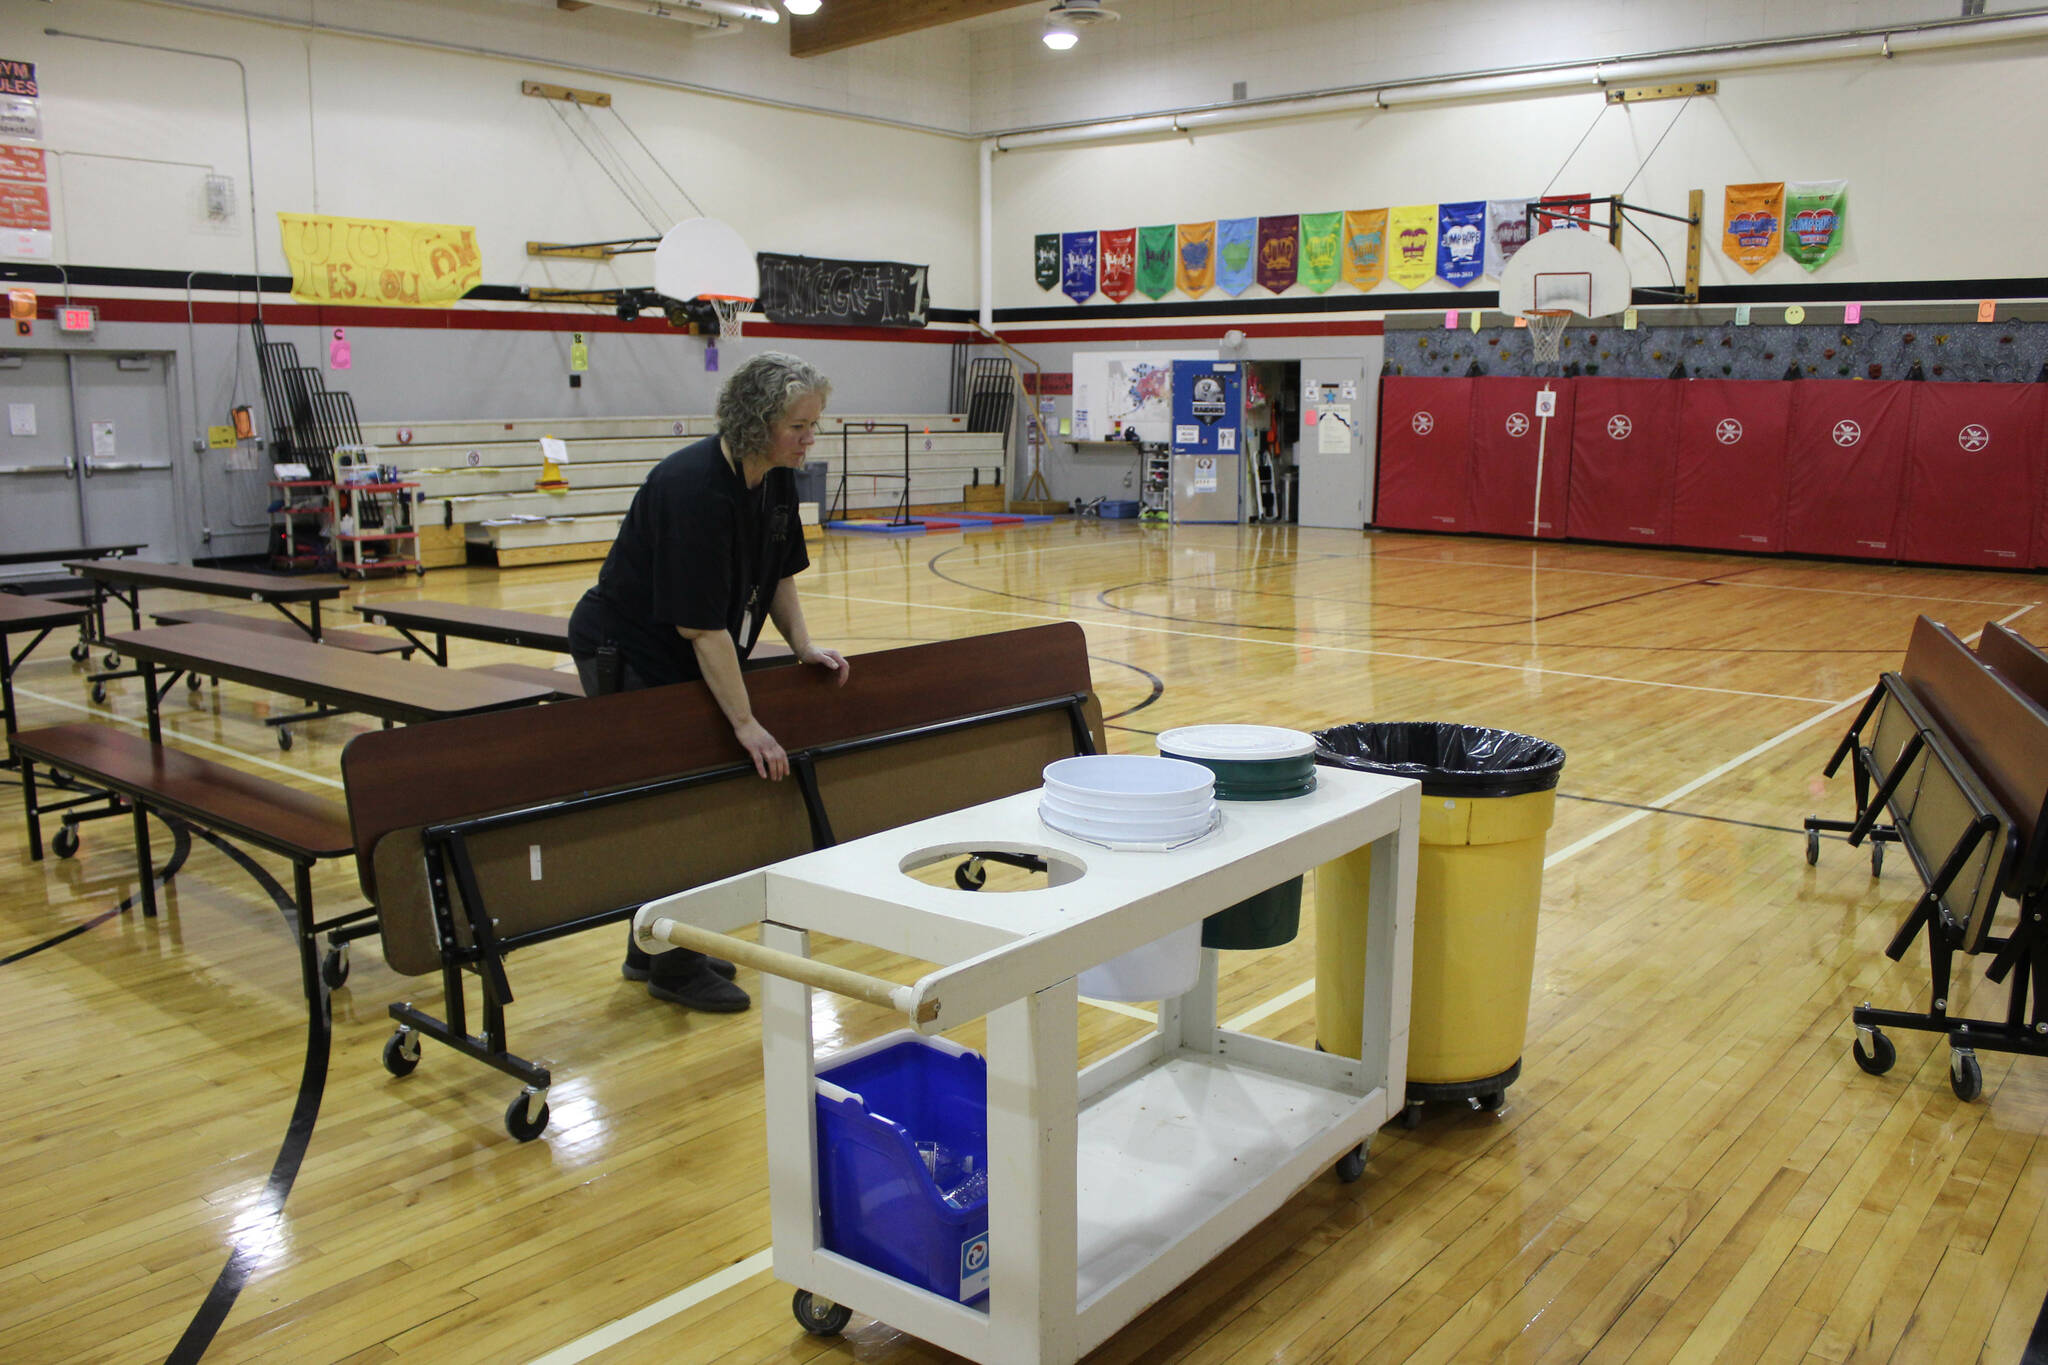 Principal Denise Kelly helps set up lunch materials at Sterling Elementary School on Thursday, Nov. 10, 2022, in Sterling, Alaska. (Ashlyn O’Hara/Peninsula Clarion)